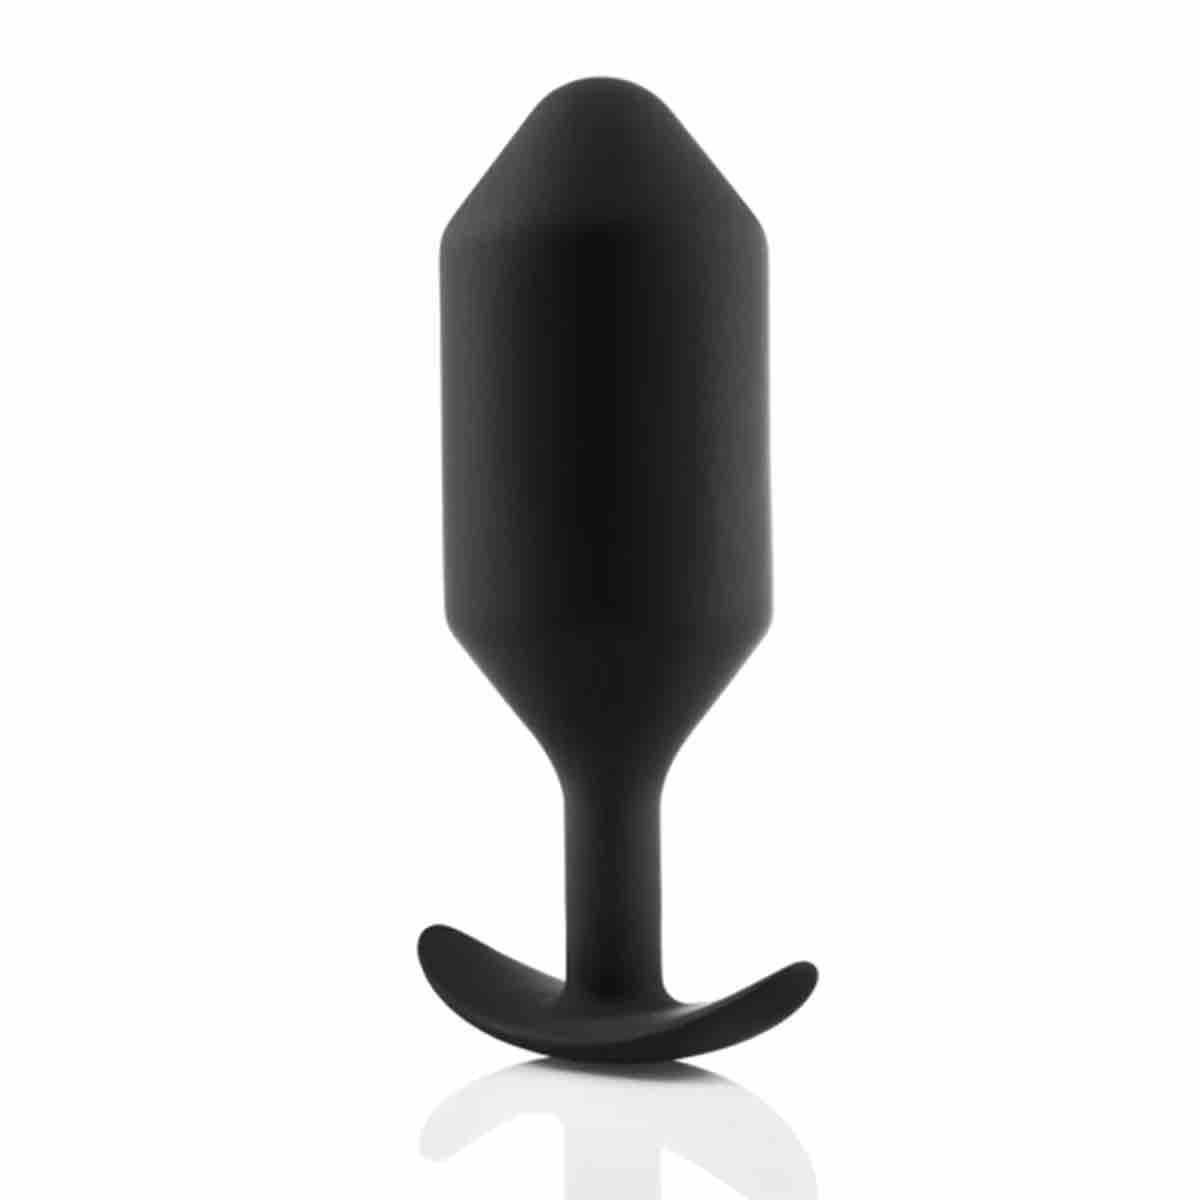 Size 6 black B-Vibe Snug Plug.